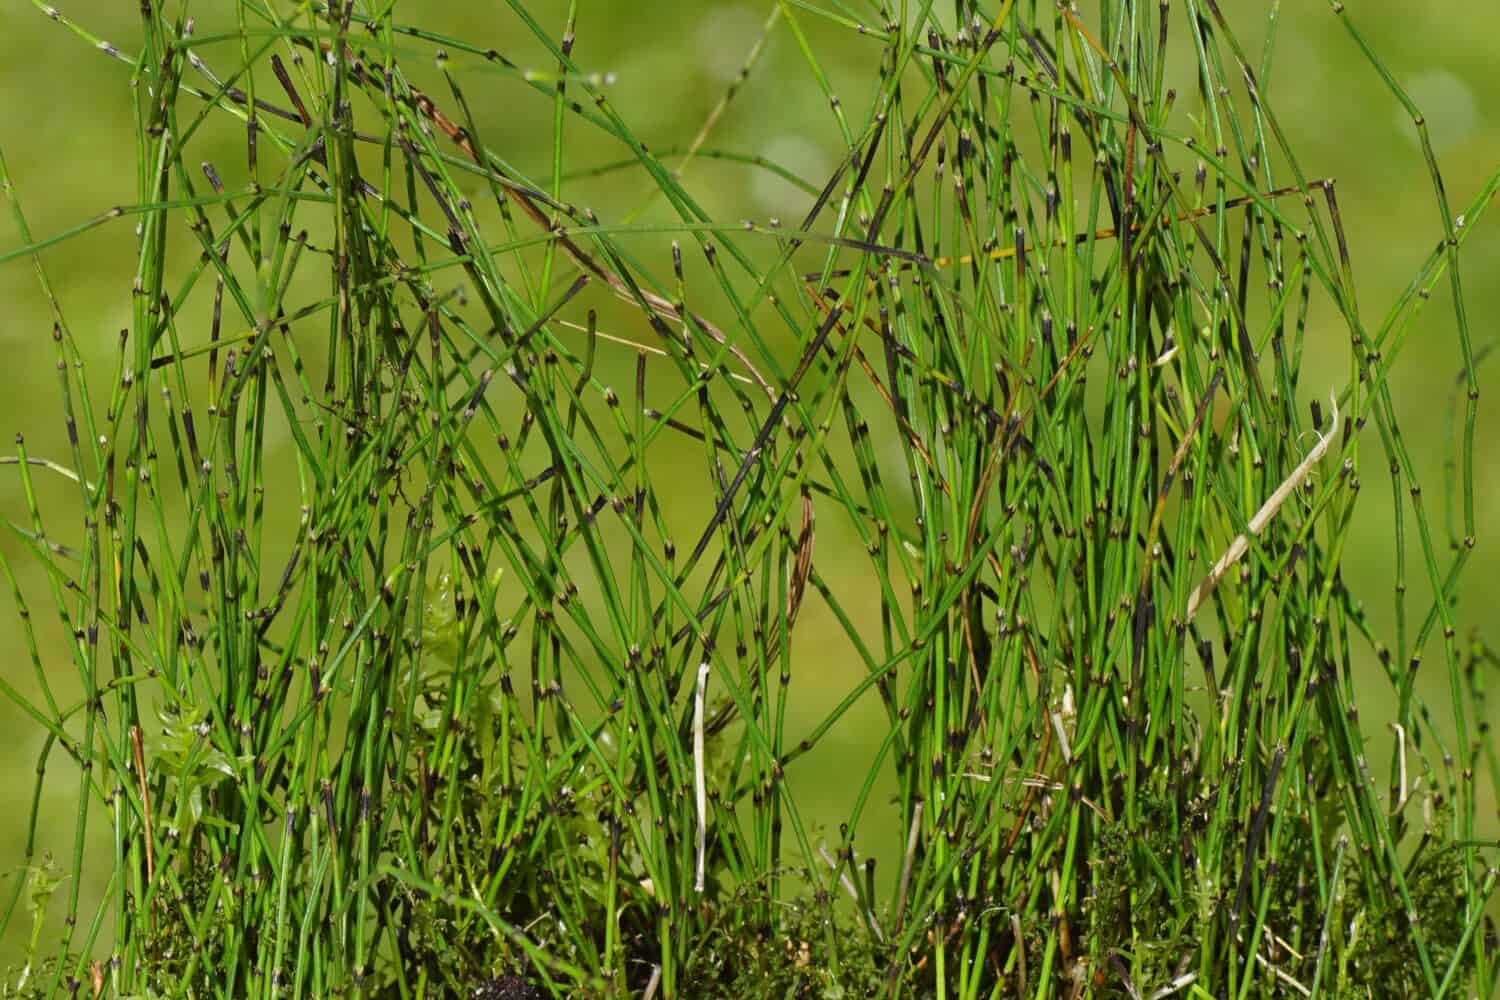 Closeup Small Horsetail, dwarf scouringrush (Equisetum scirpoides). Family horsetails (Equisetaceae). Dutch garden, spring, april                               